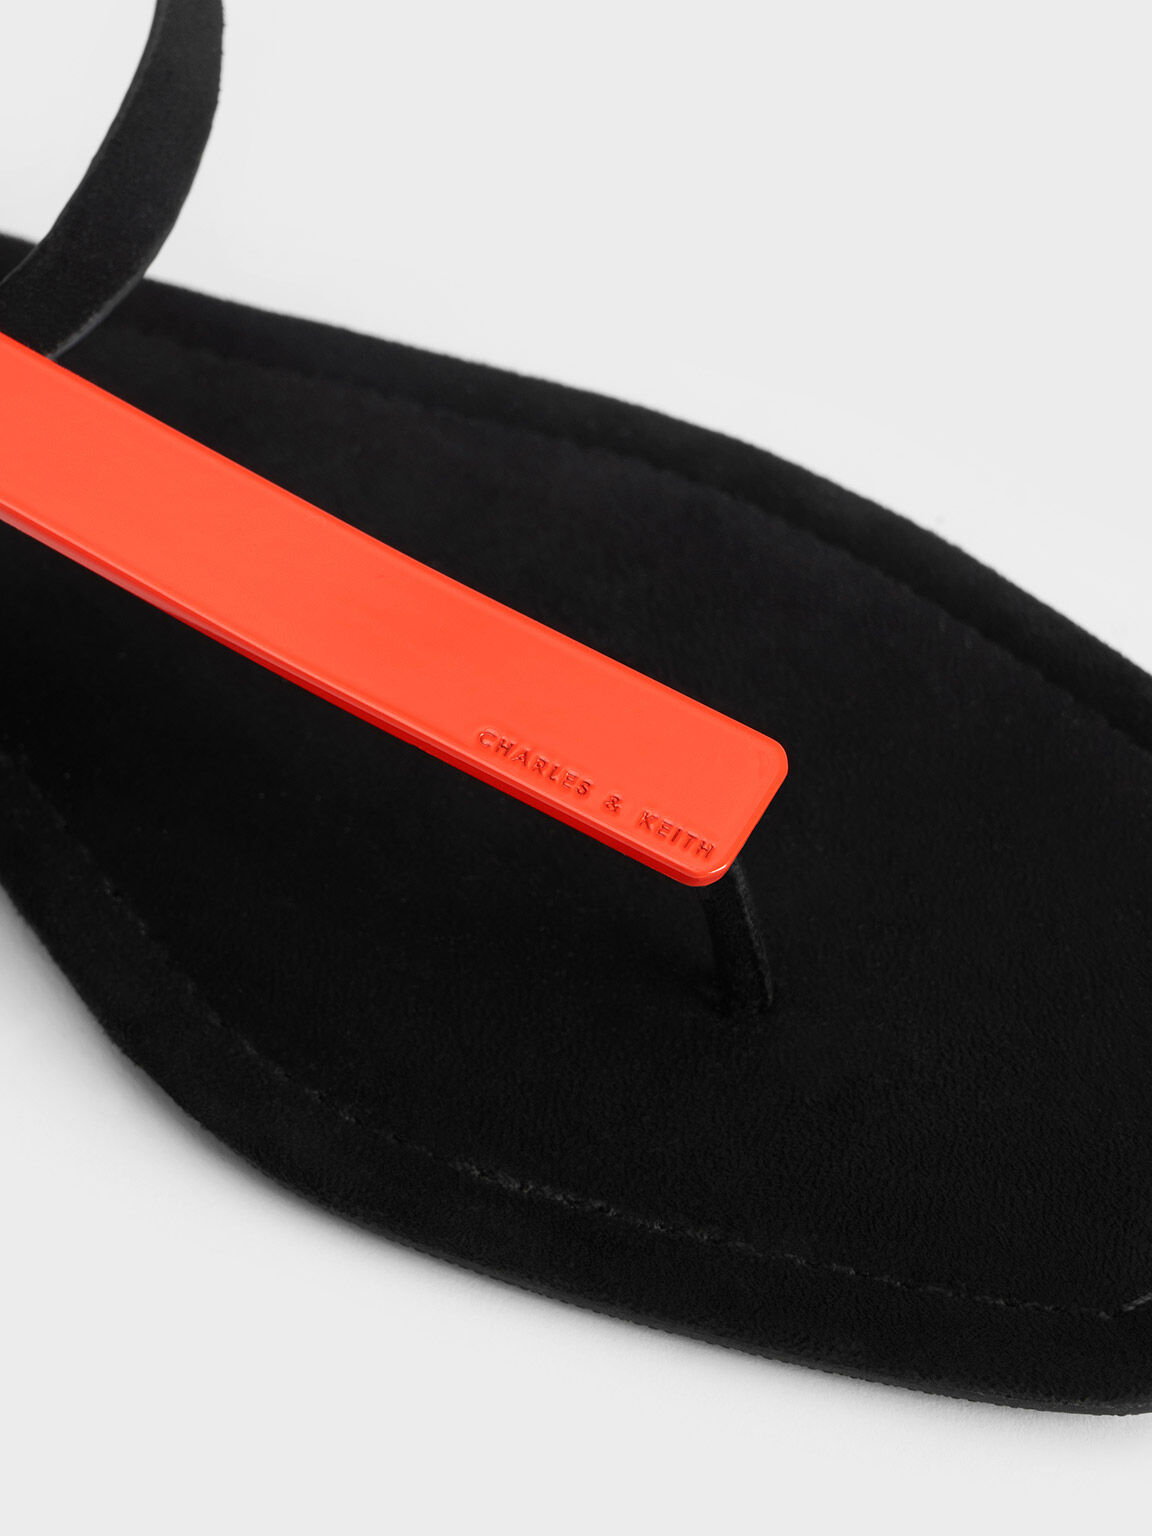 Textured Metallic Accent T-Bar Thong Sandals, Black Textured, hi-res